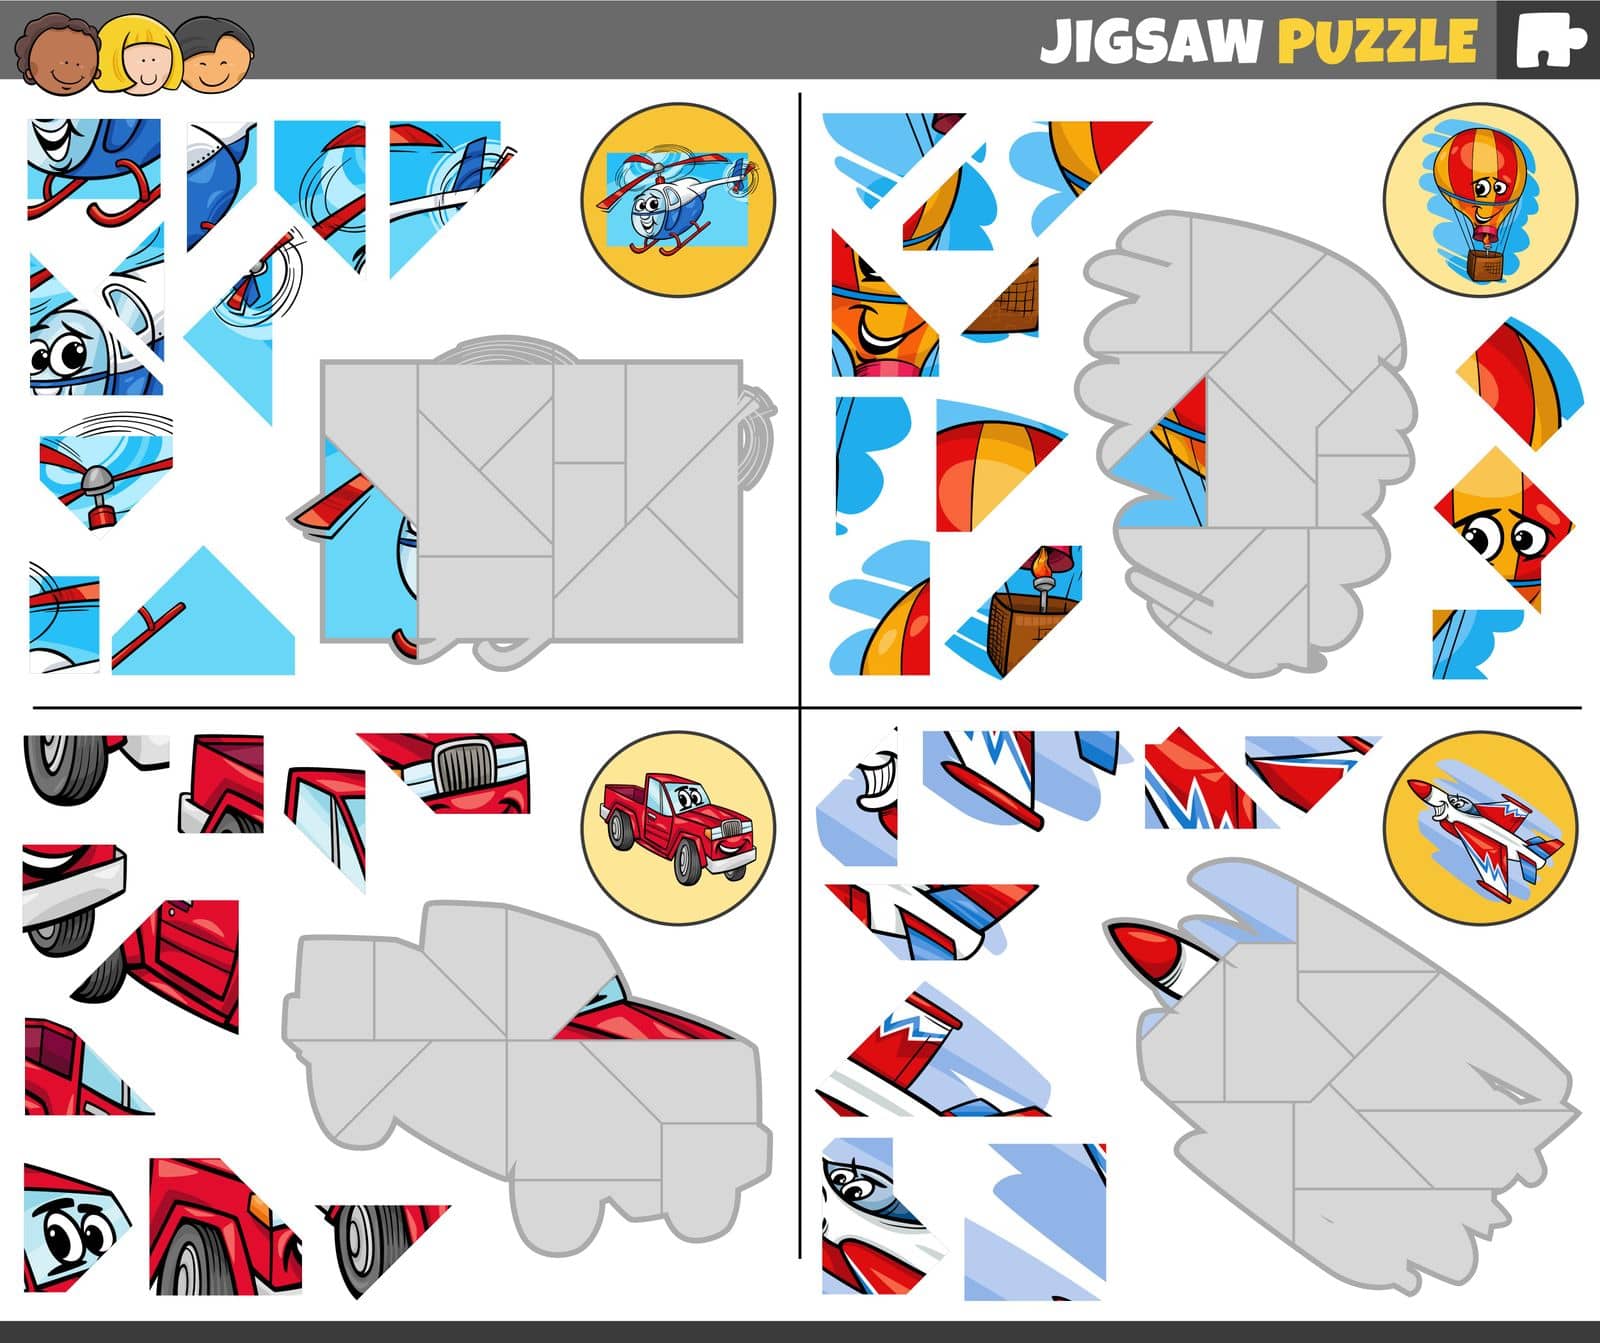 jigsaw puzzle game with cartoon transport characters by izakowski